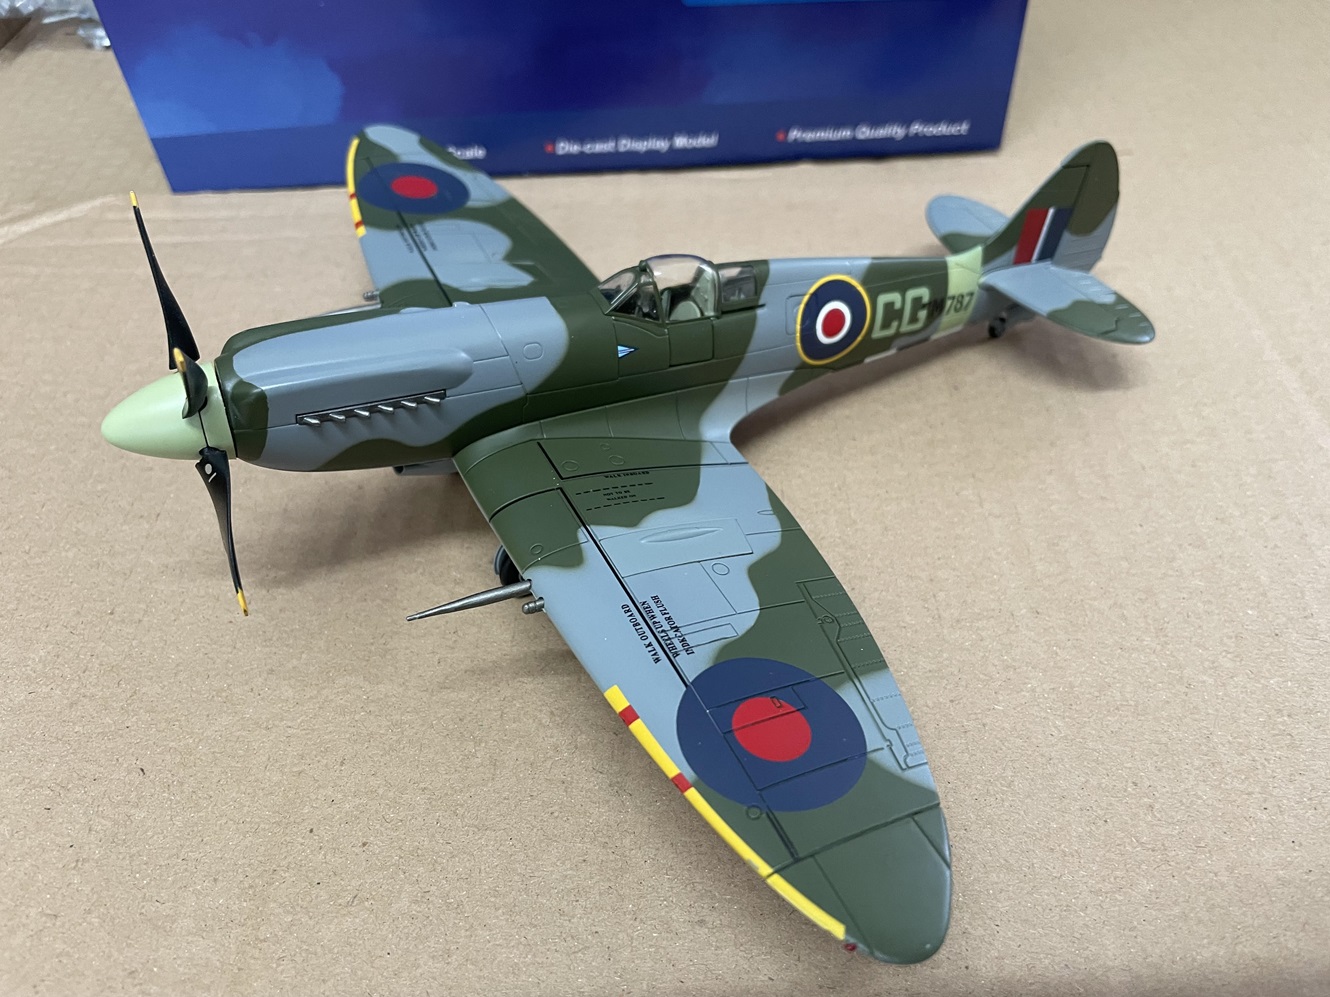 Premium Hobbies Spitfire Mk. XIV C 1:72 Plastic Model Airplane Kit 132V